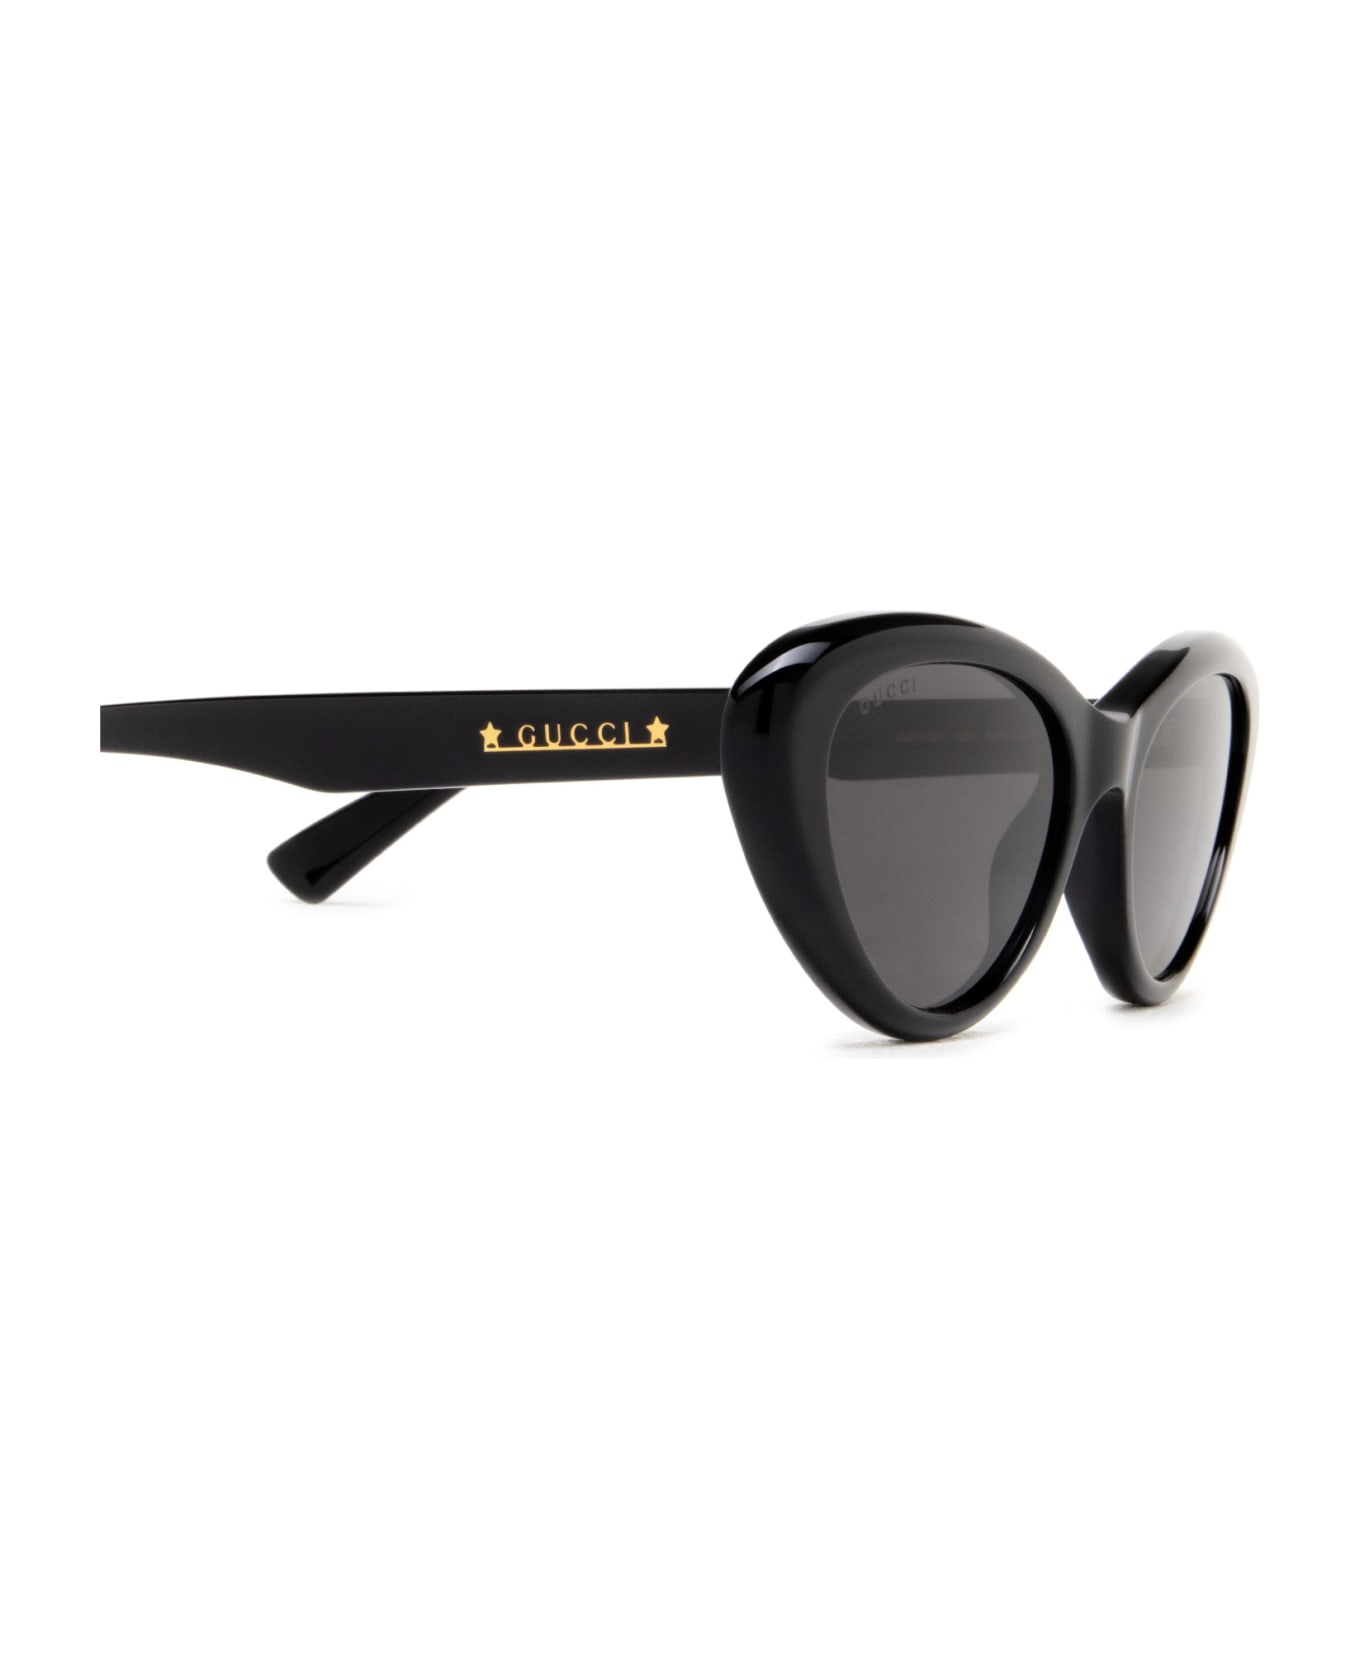 Gucci Eyewear Gg1170s Black Sunglasses - Black